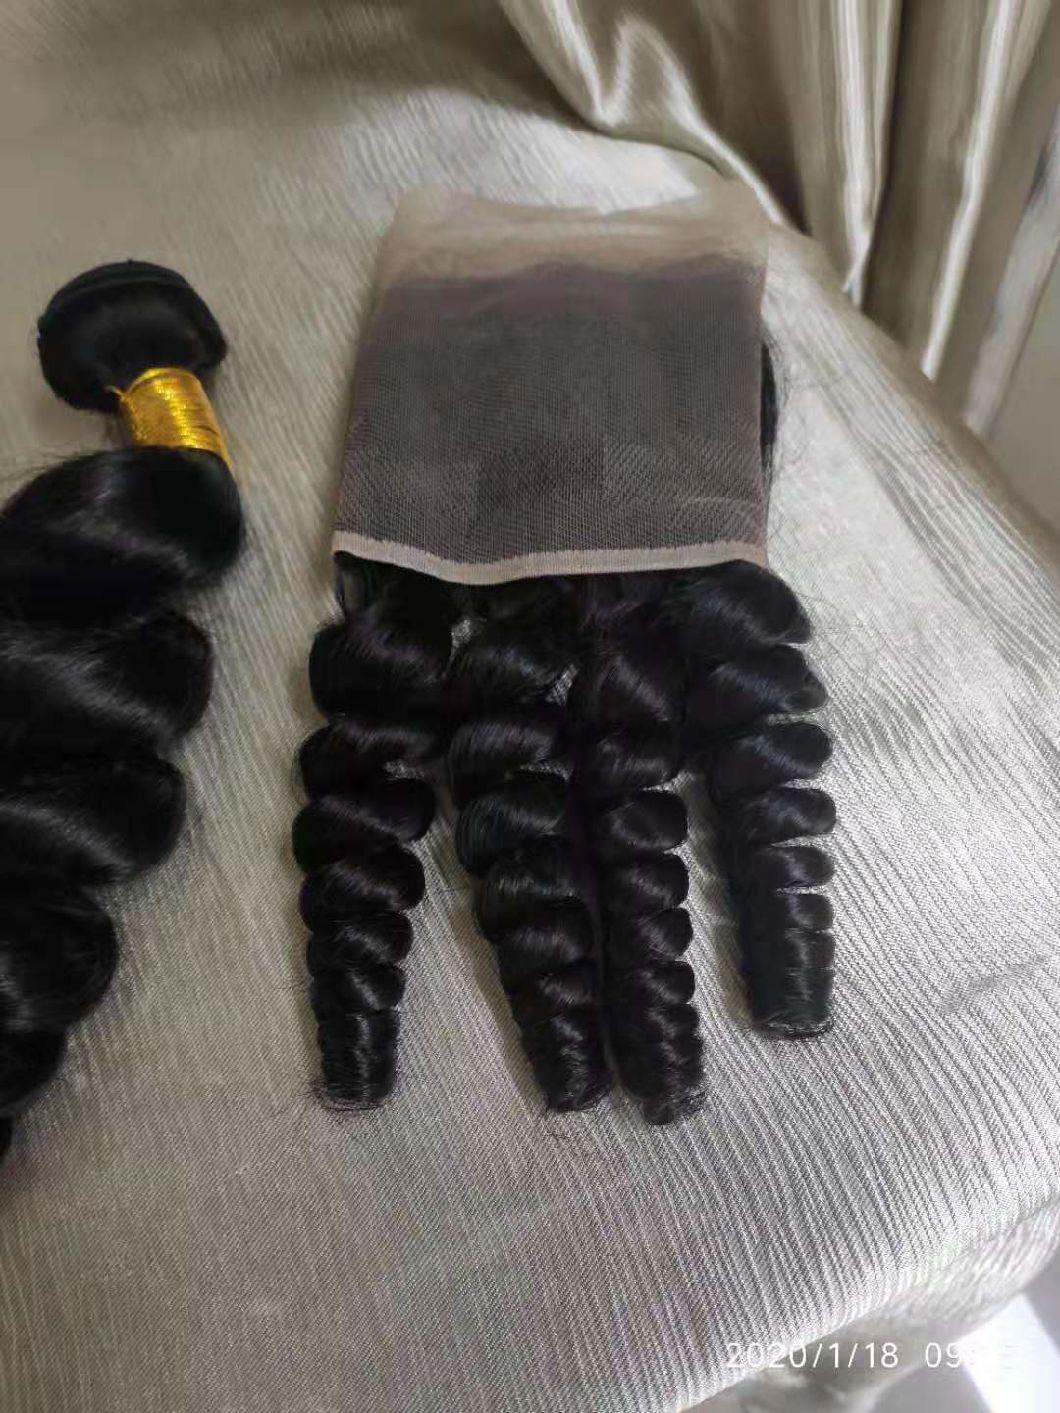 Wholesales Price Loose Wave Brazilian Human Hair Bundles